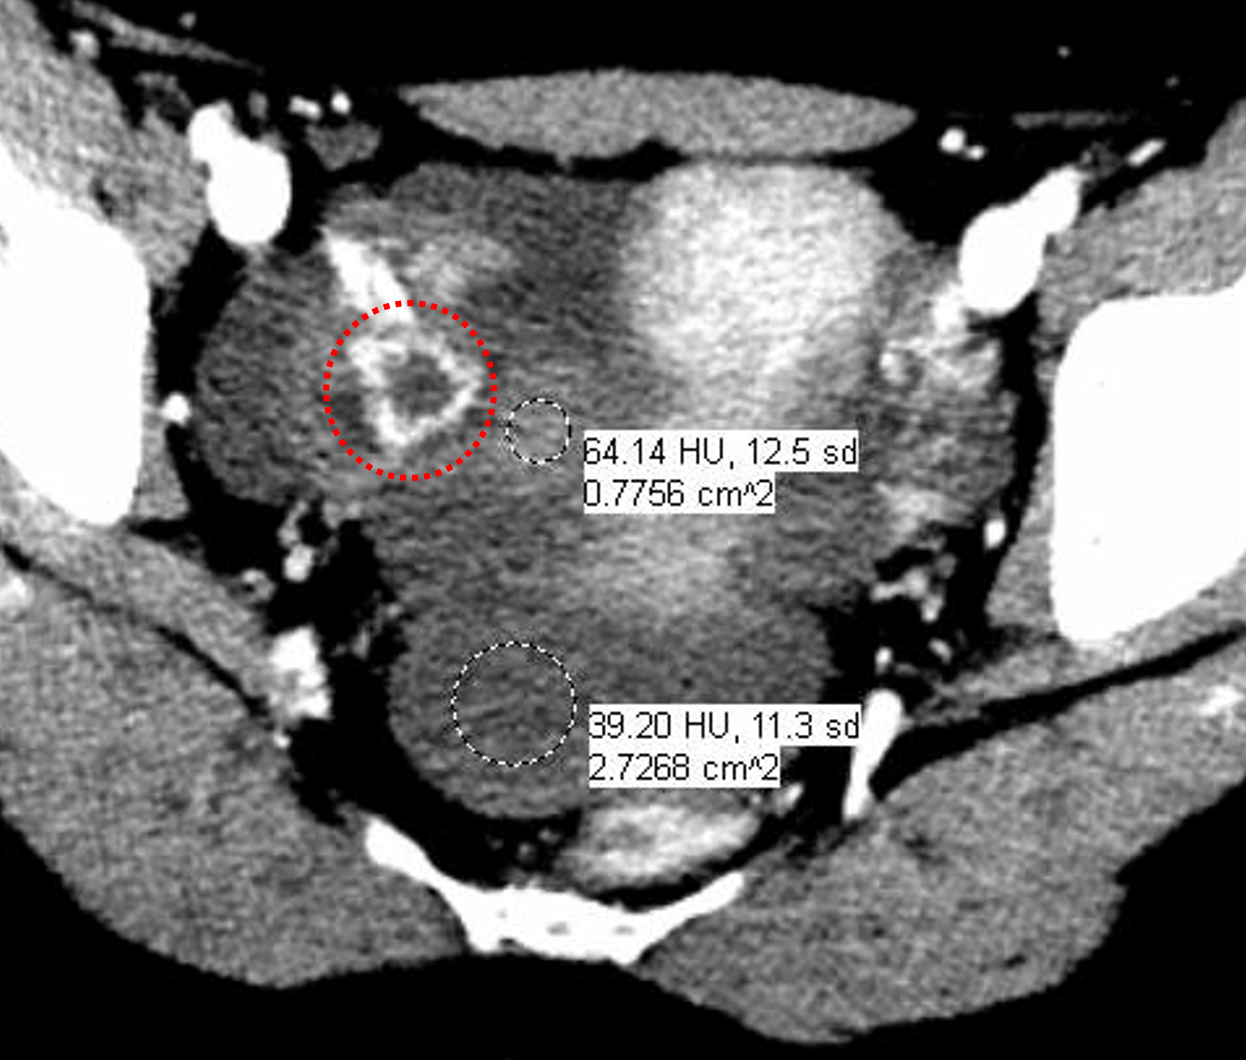 Hemorrhagic Ovarian Cyst Mri